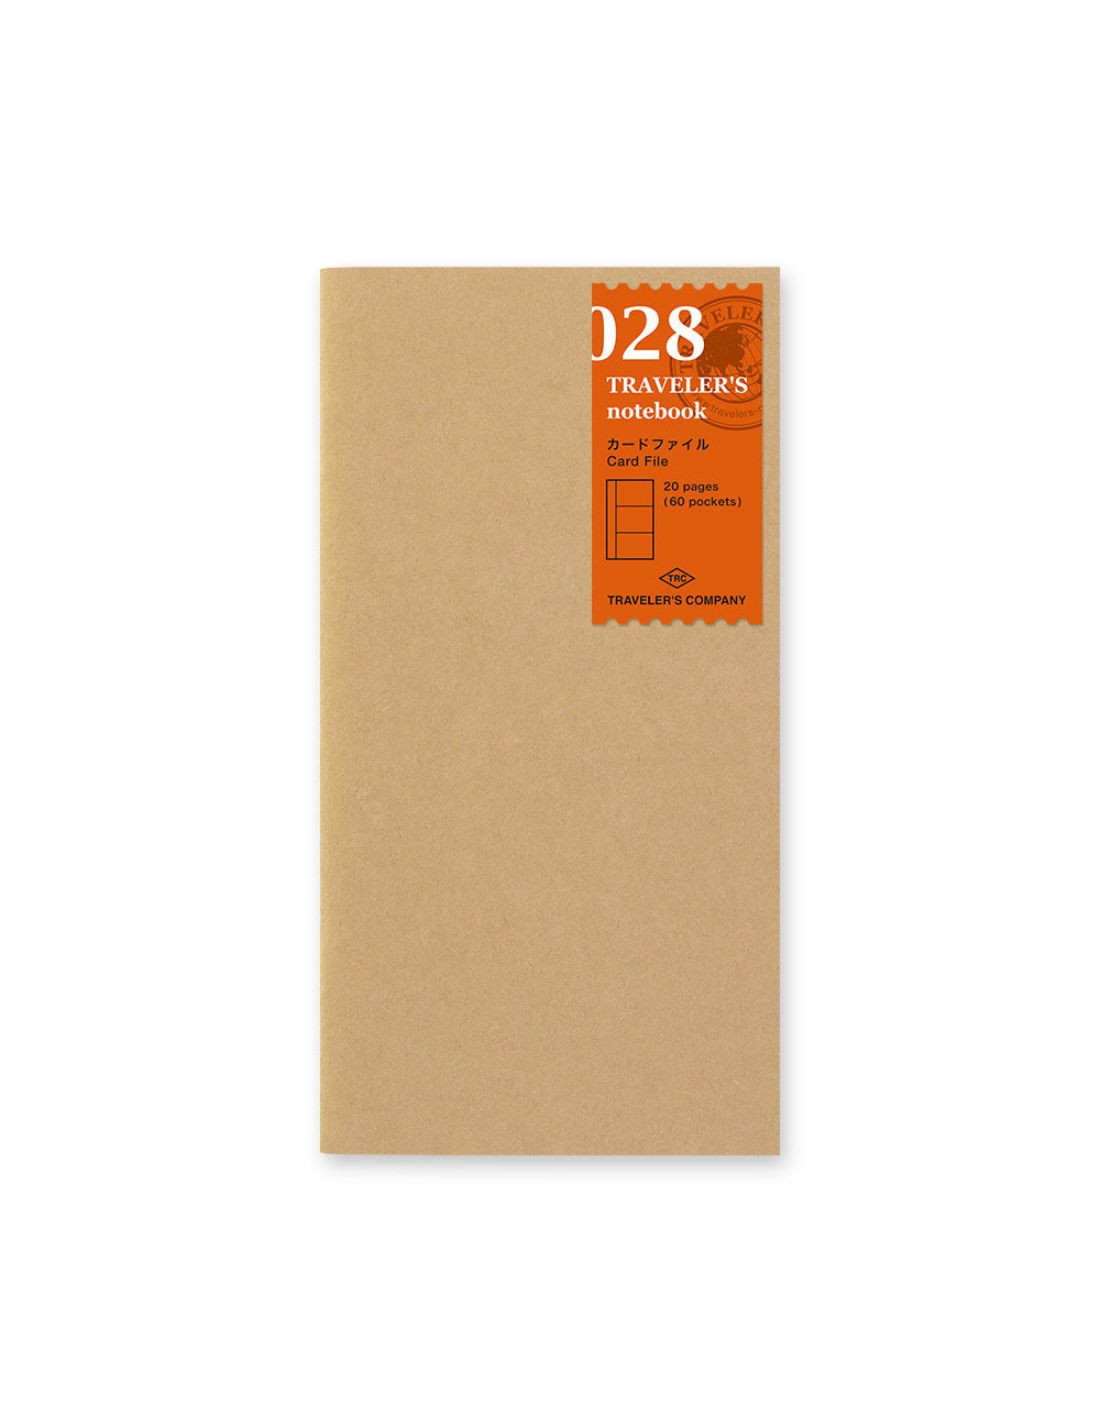 Refill 028 Card File - TRAVELER'S notebook